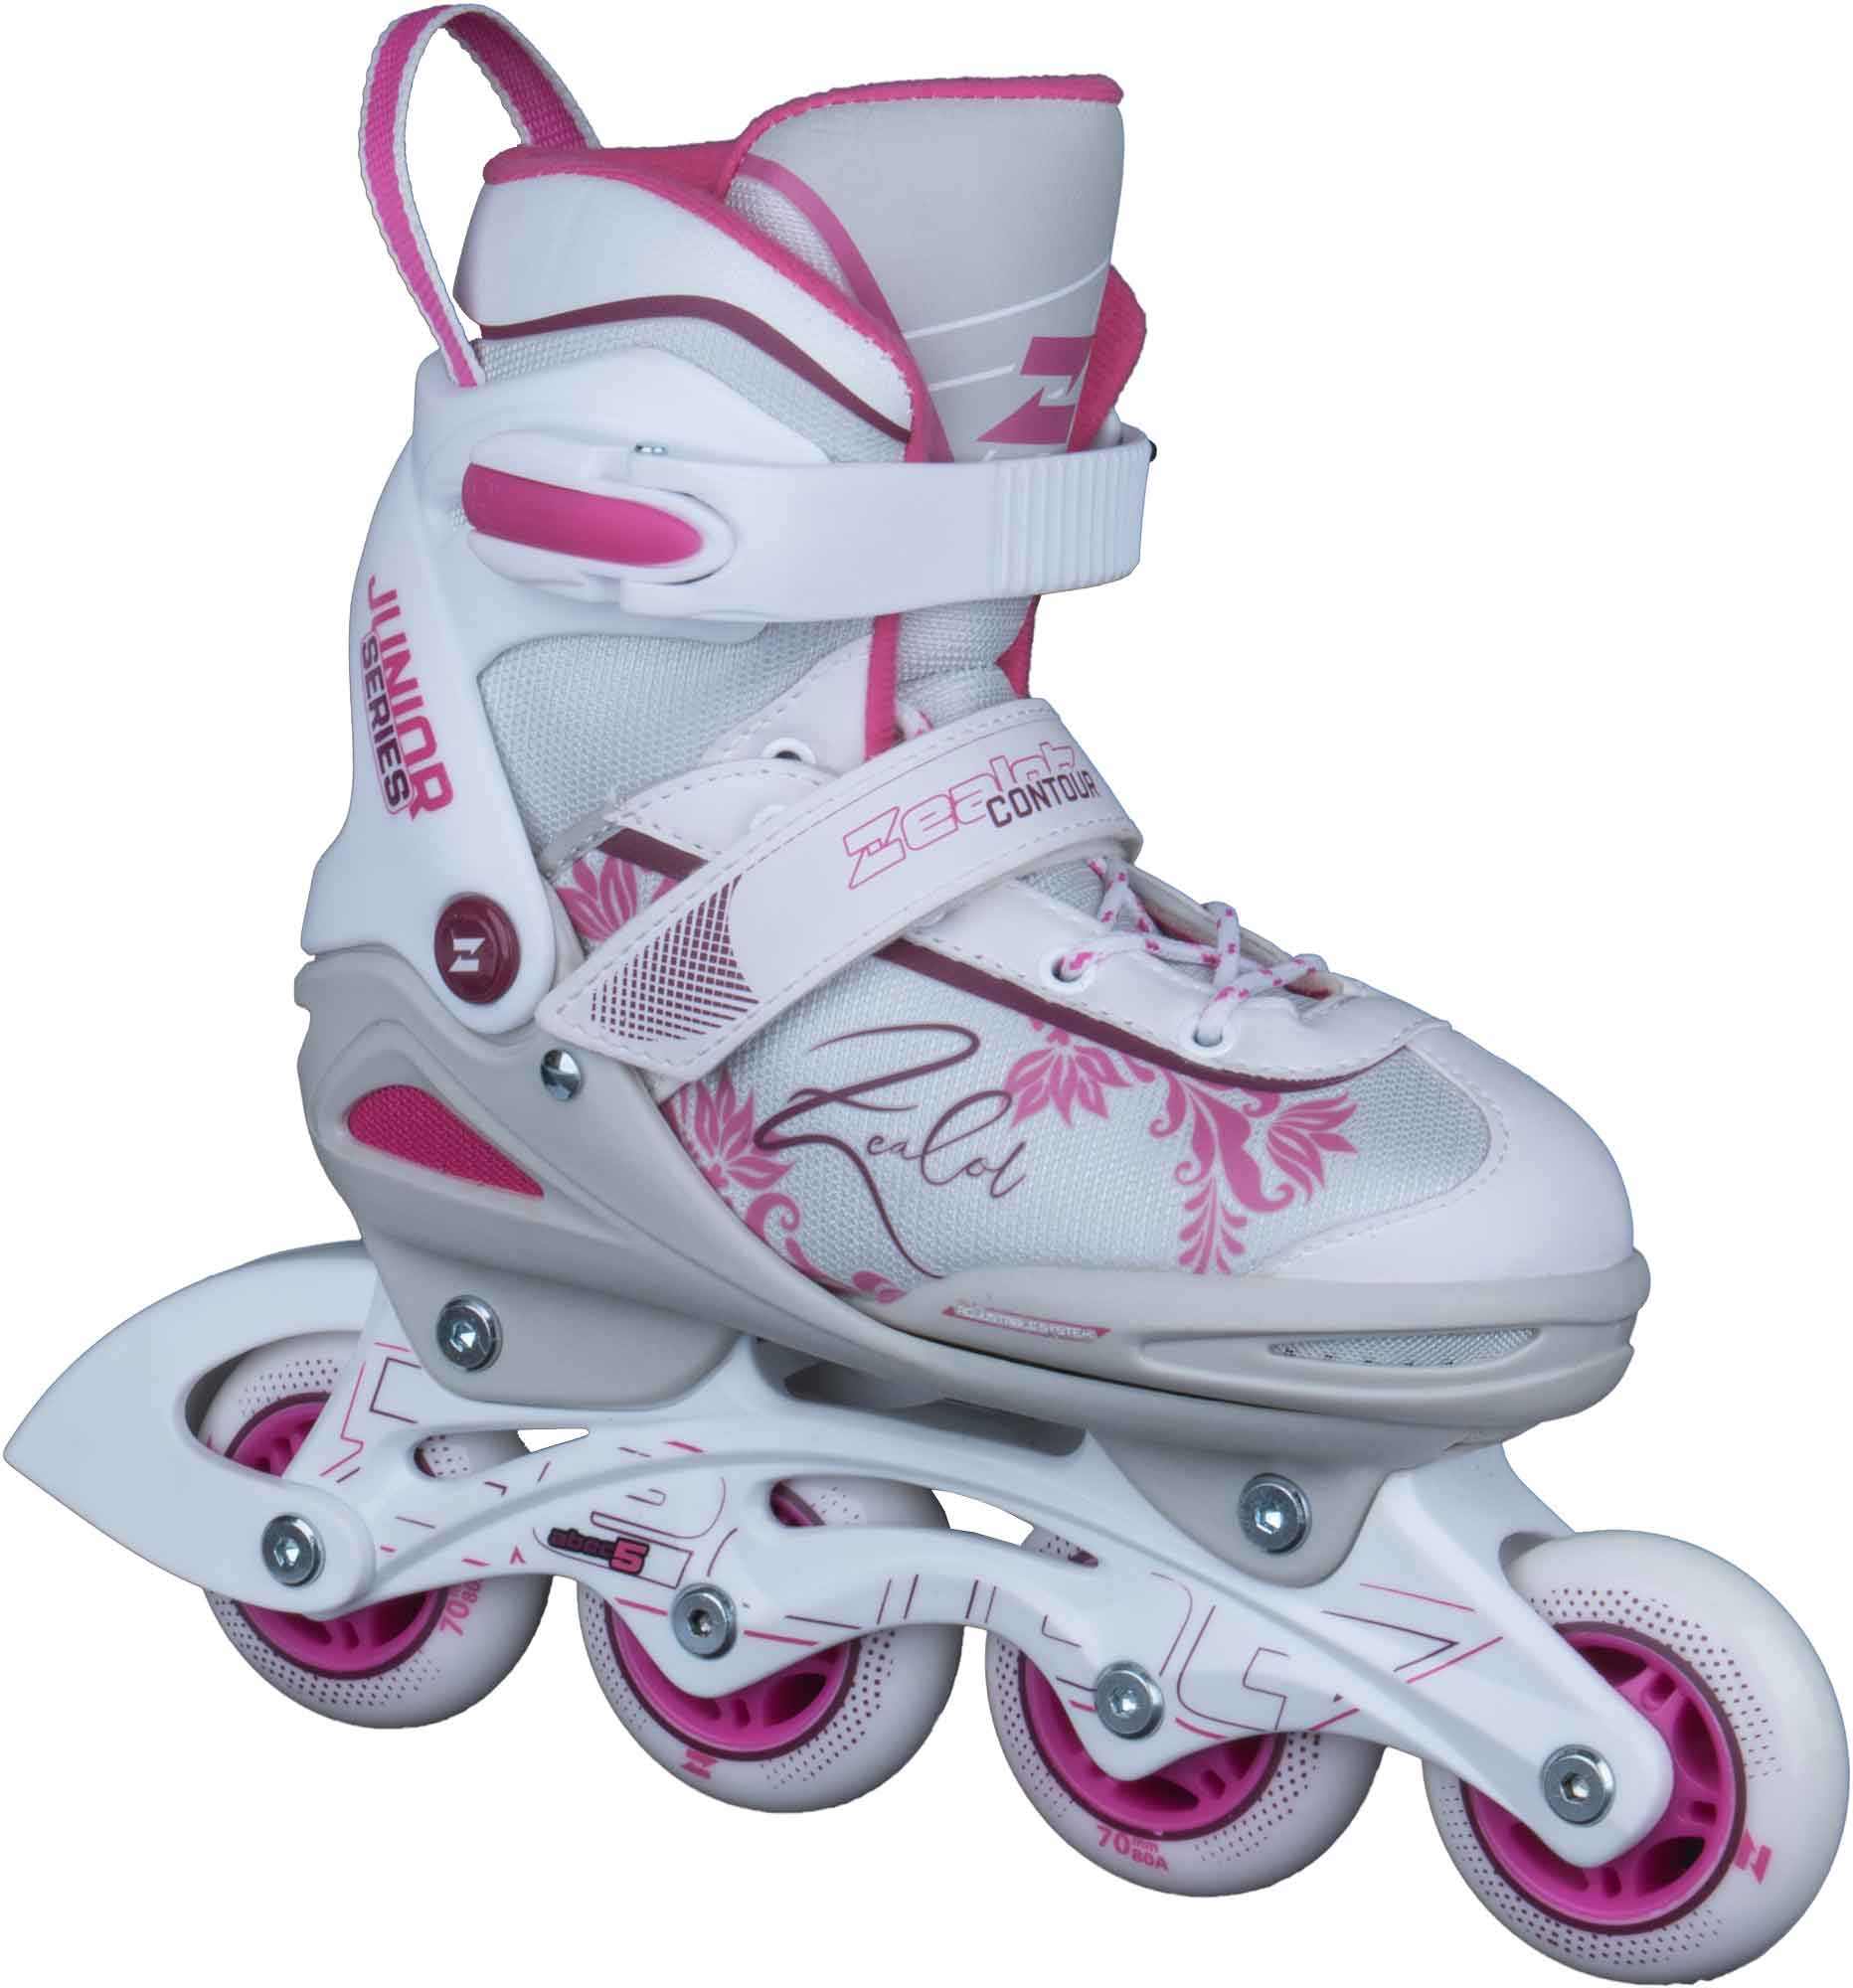 Girls' inline skates